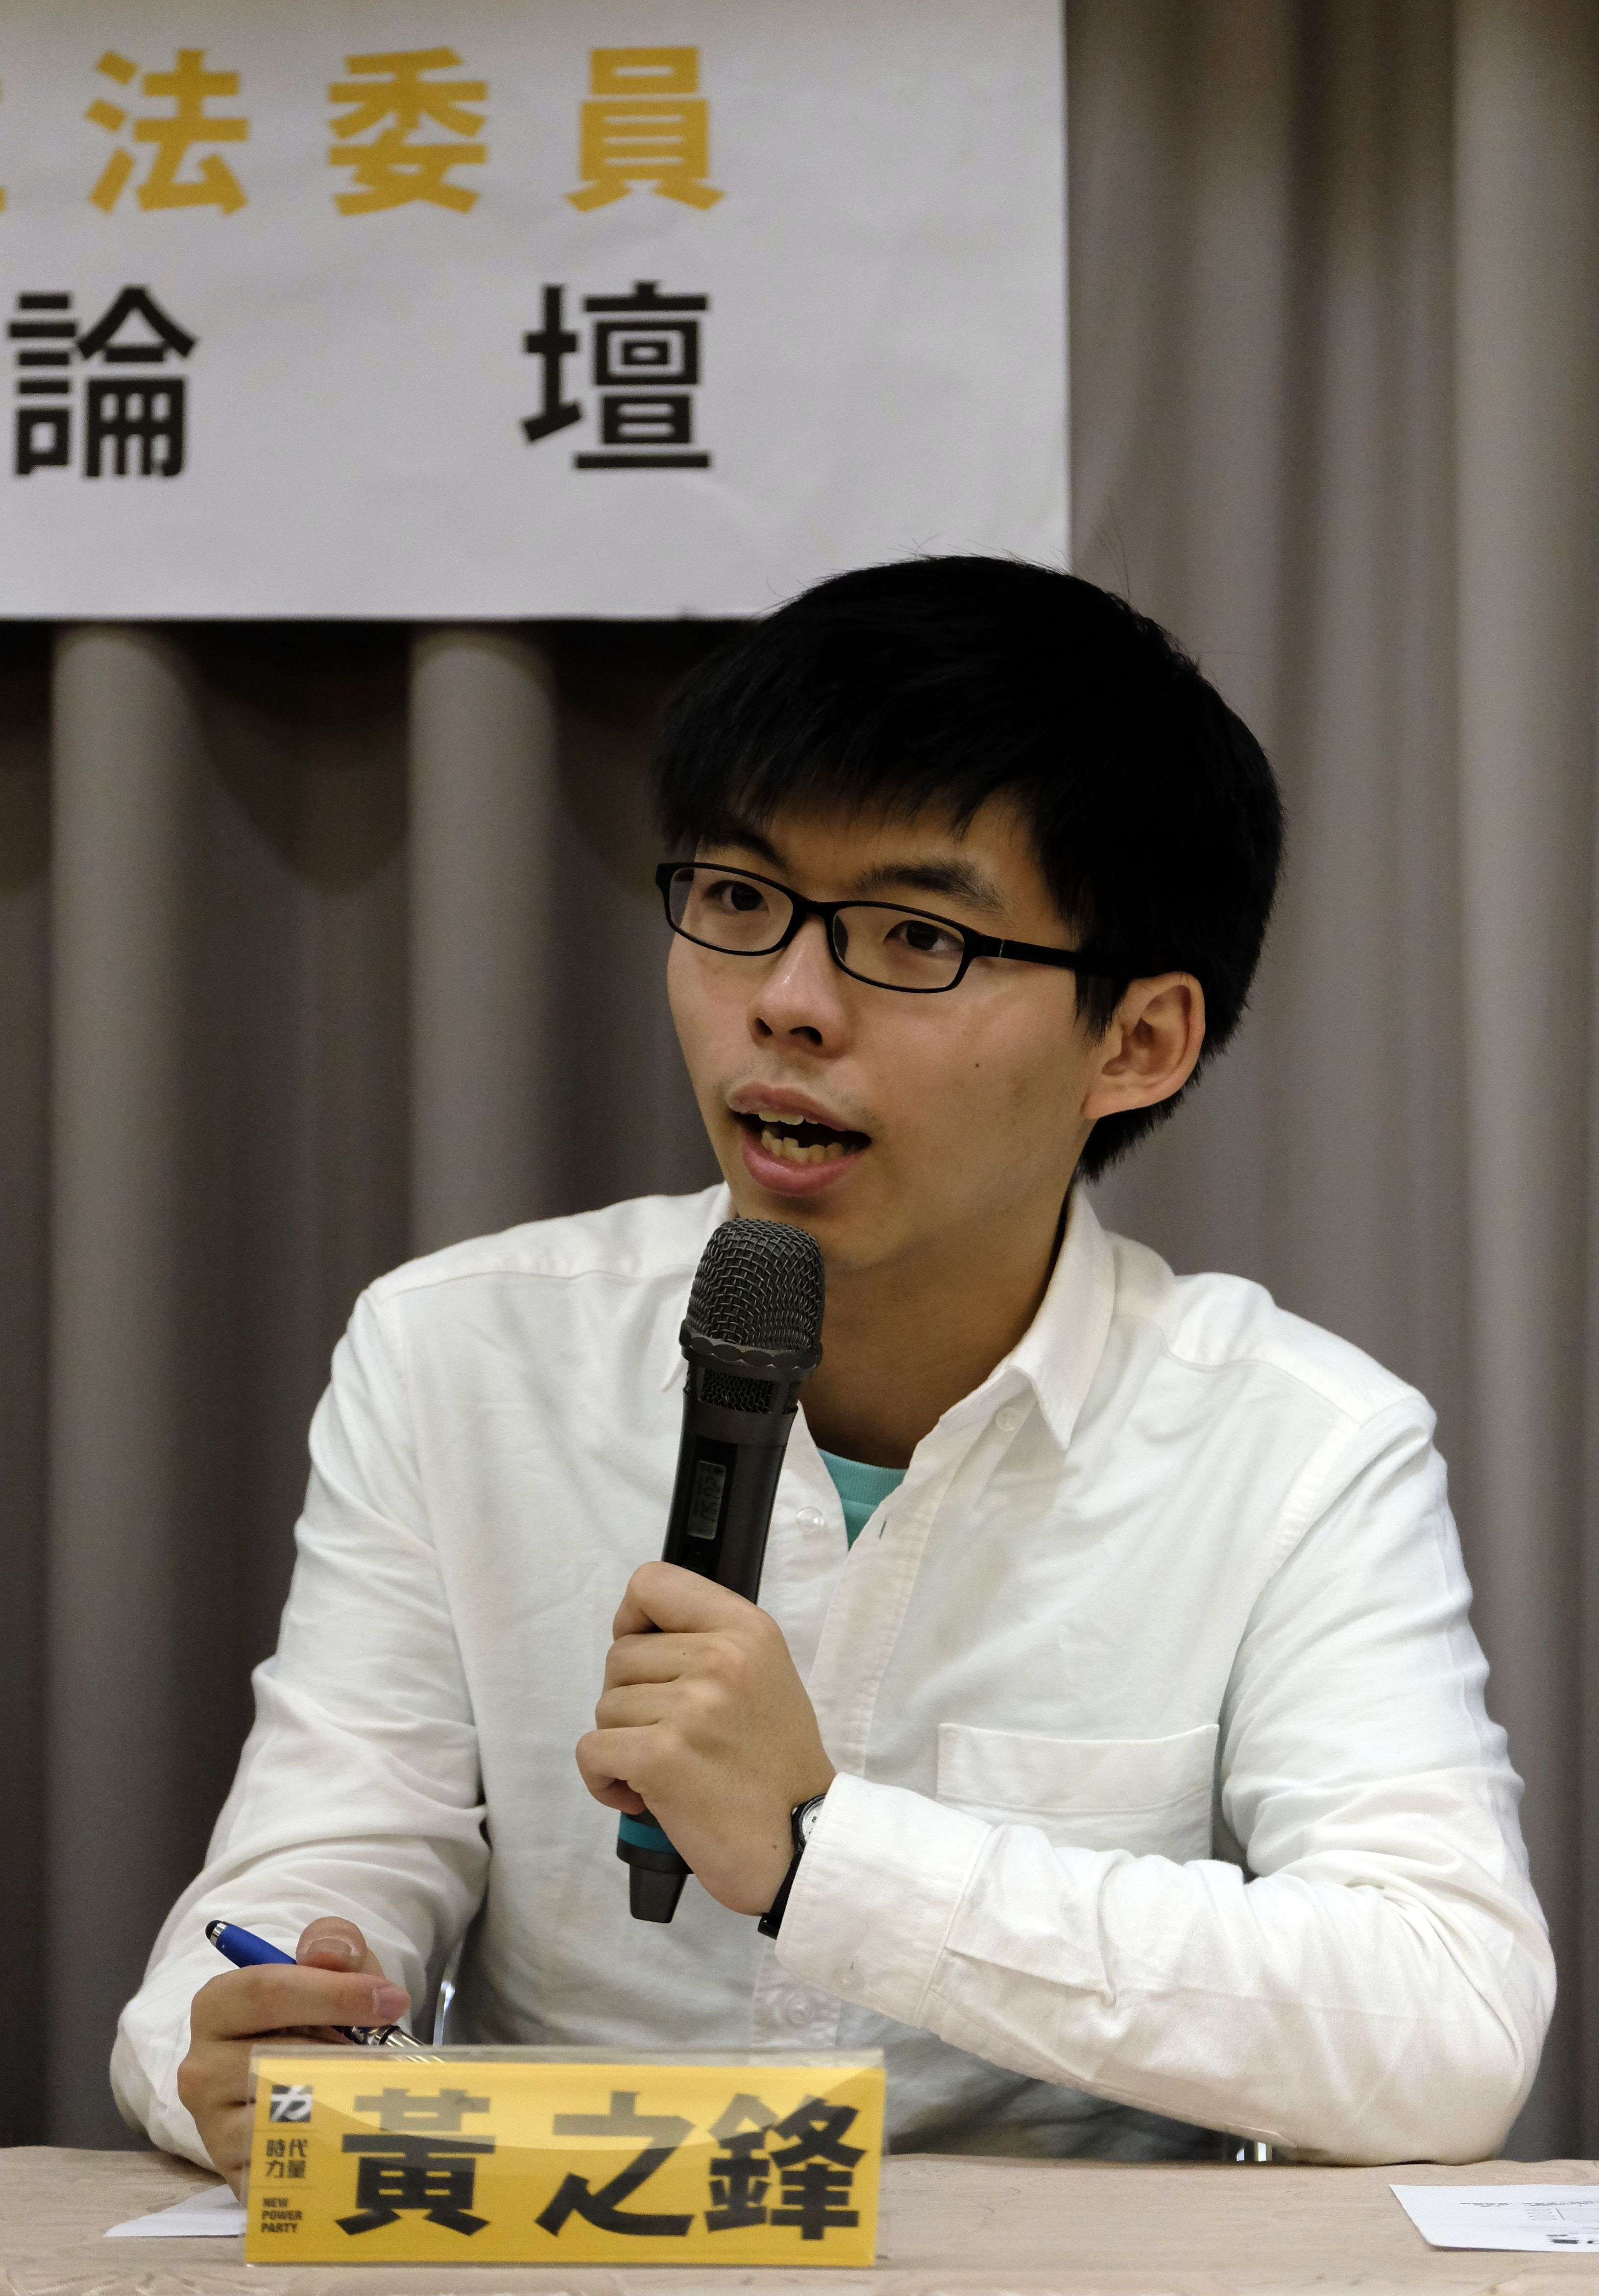 Student leader and local legislators in Taipei for political seminar